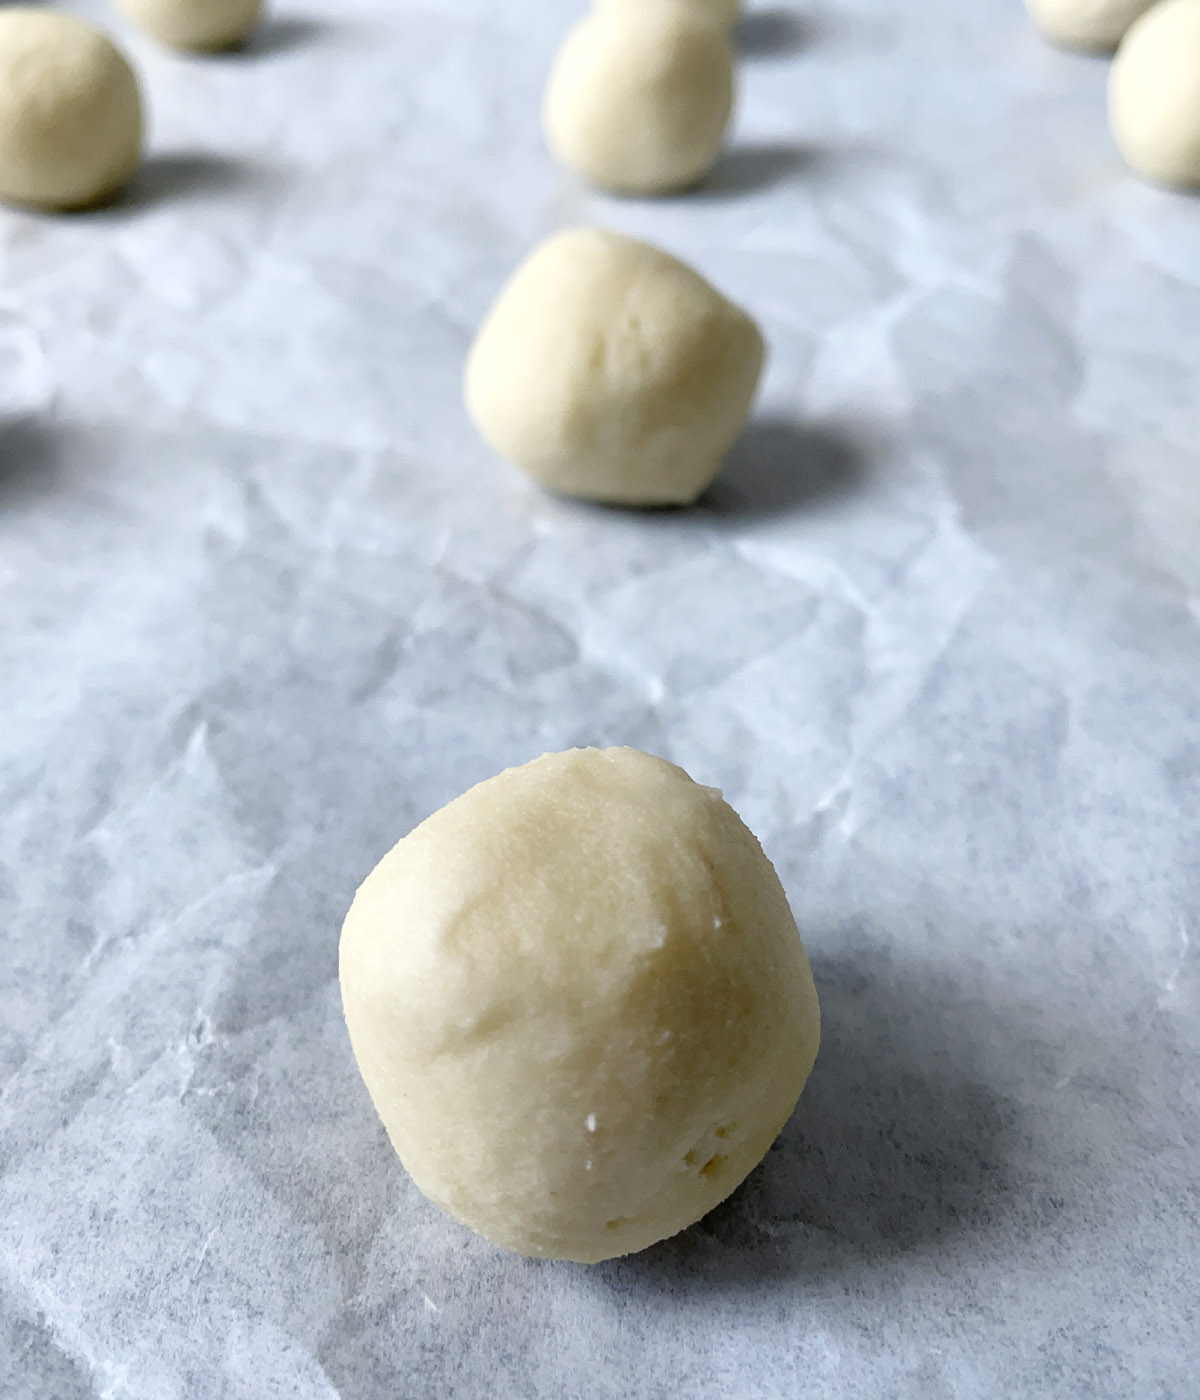 Light yellow round dough balls on a white paper on a baking sheet.